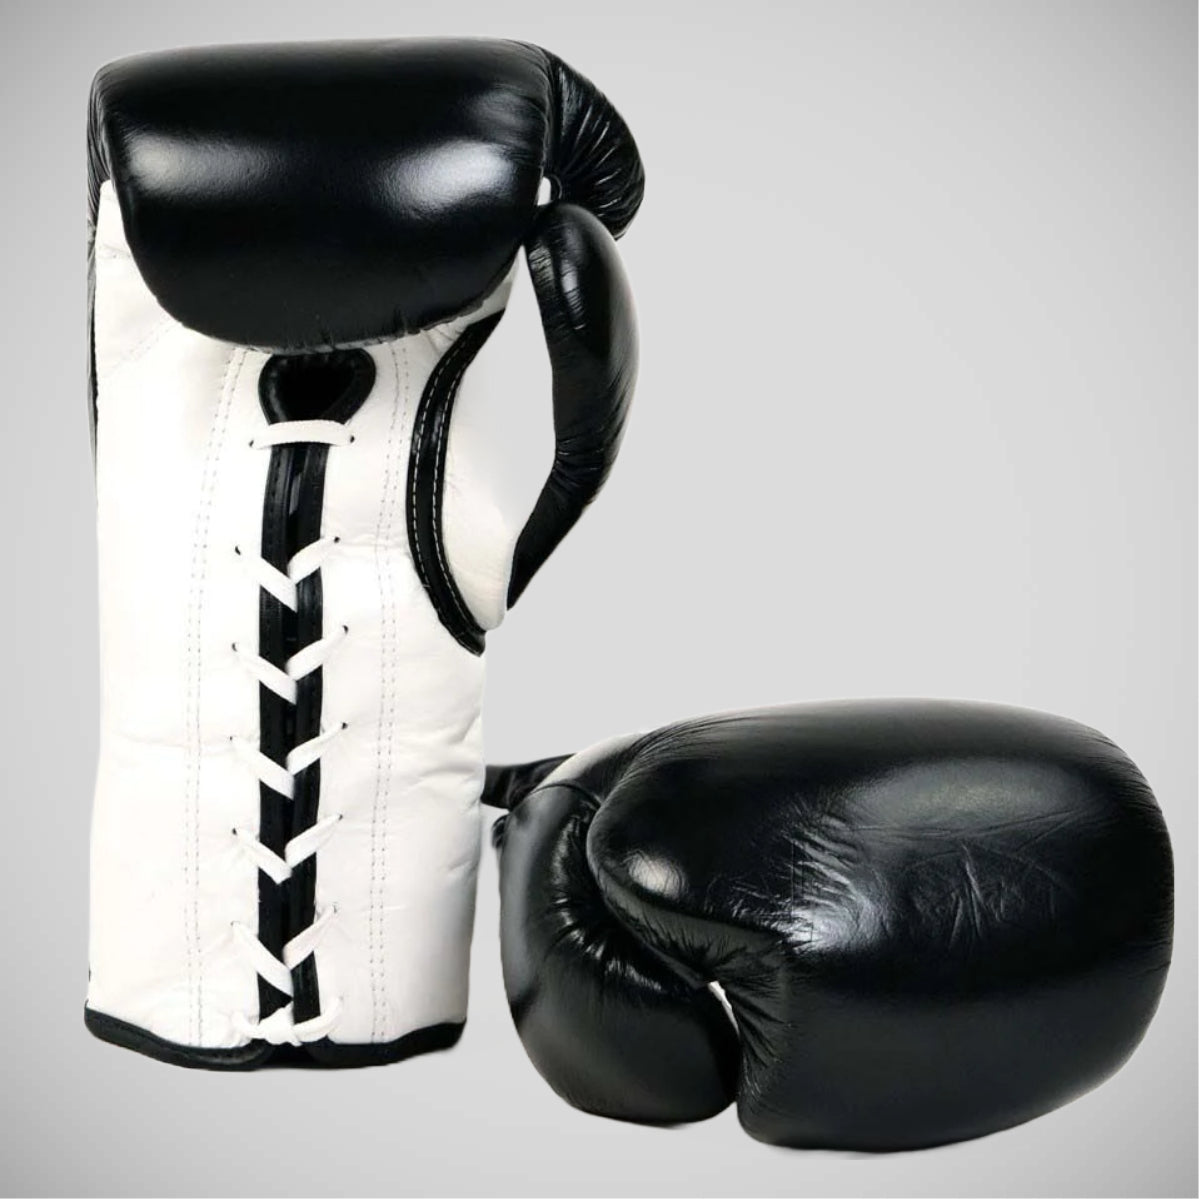 Black Fairtex BGL3 Lace-Up Boxing Gloves